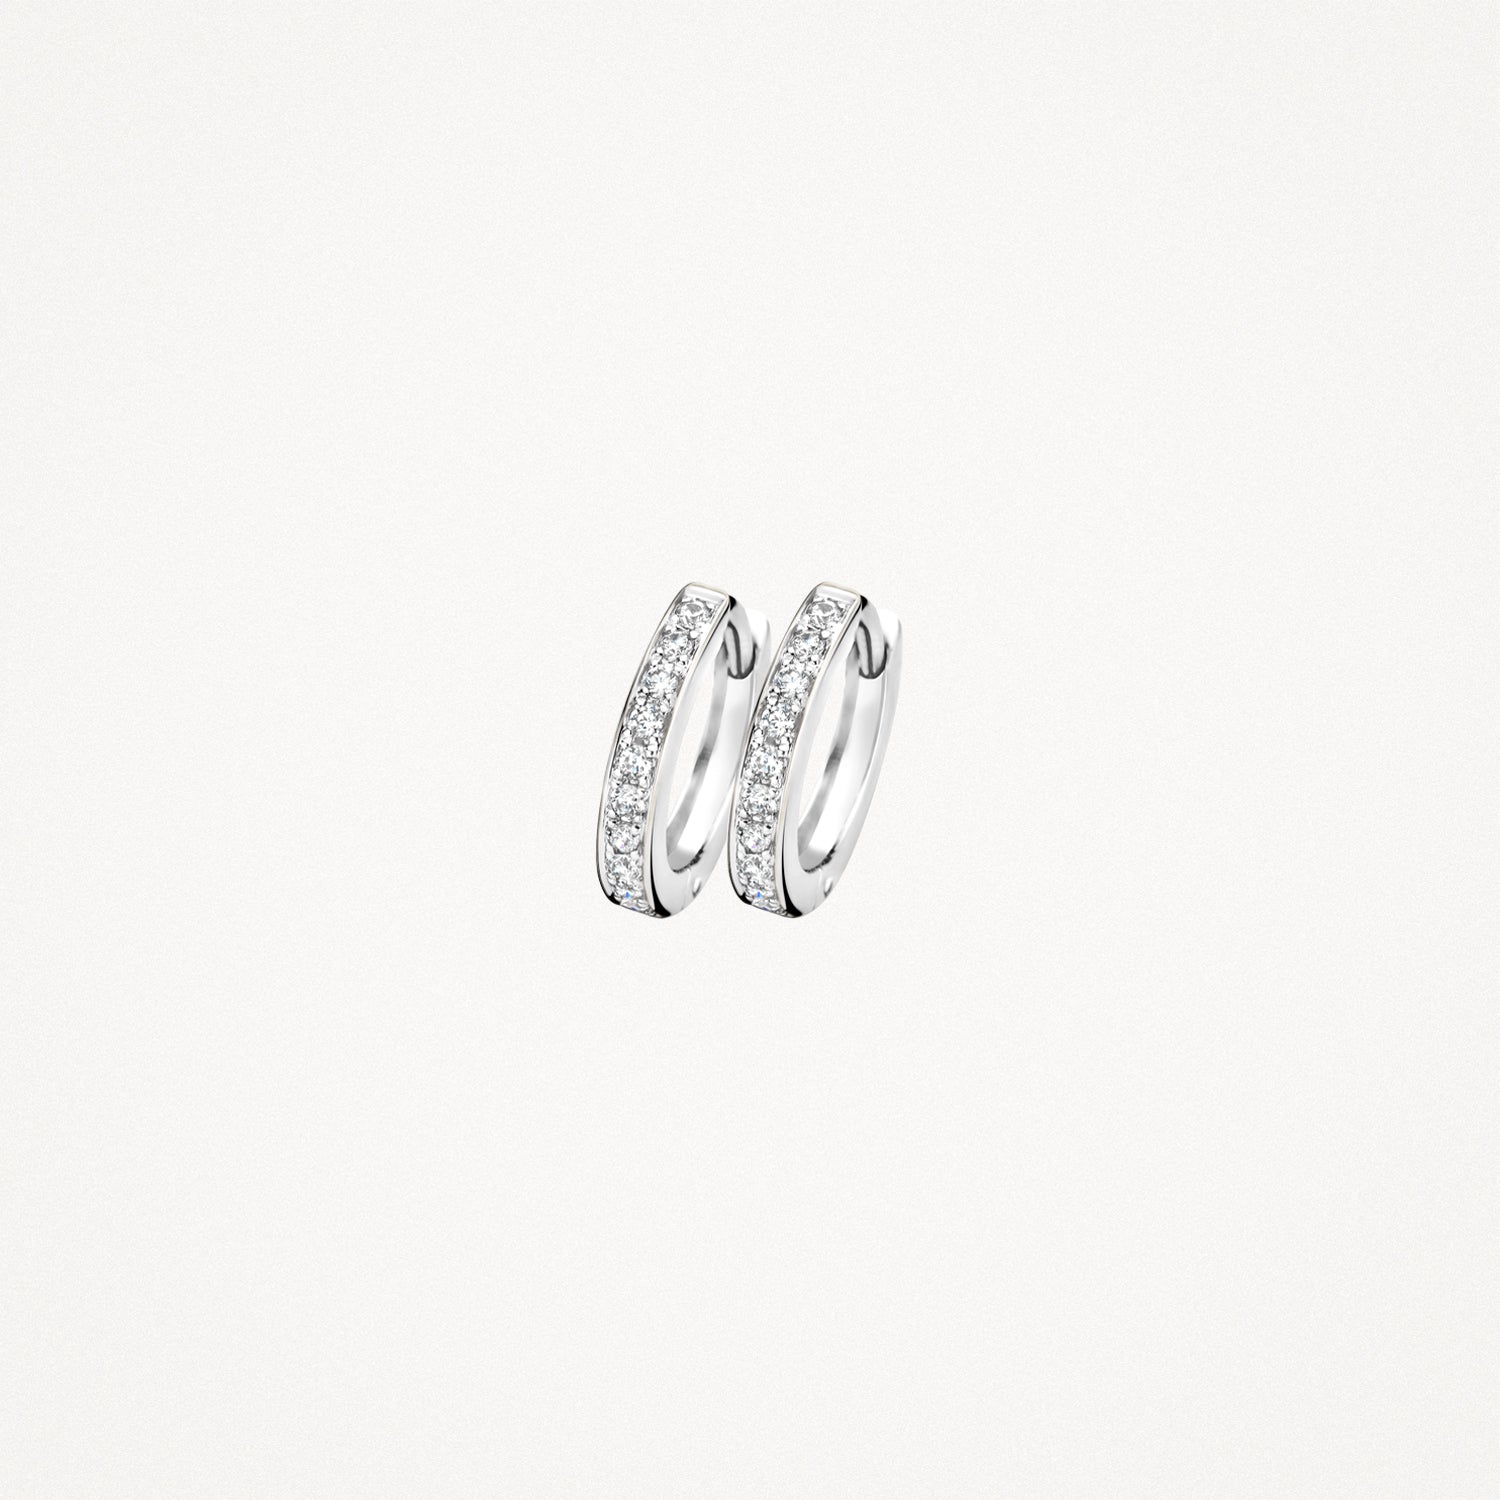 Earrings 7129WZI - 14k White Gold with zirconia